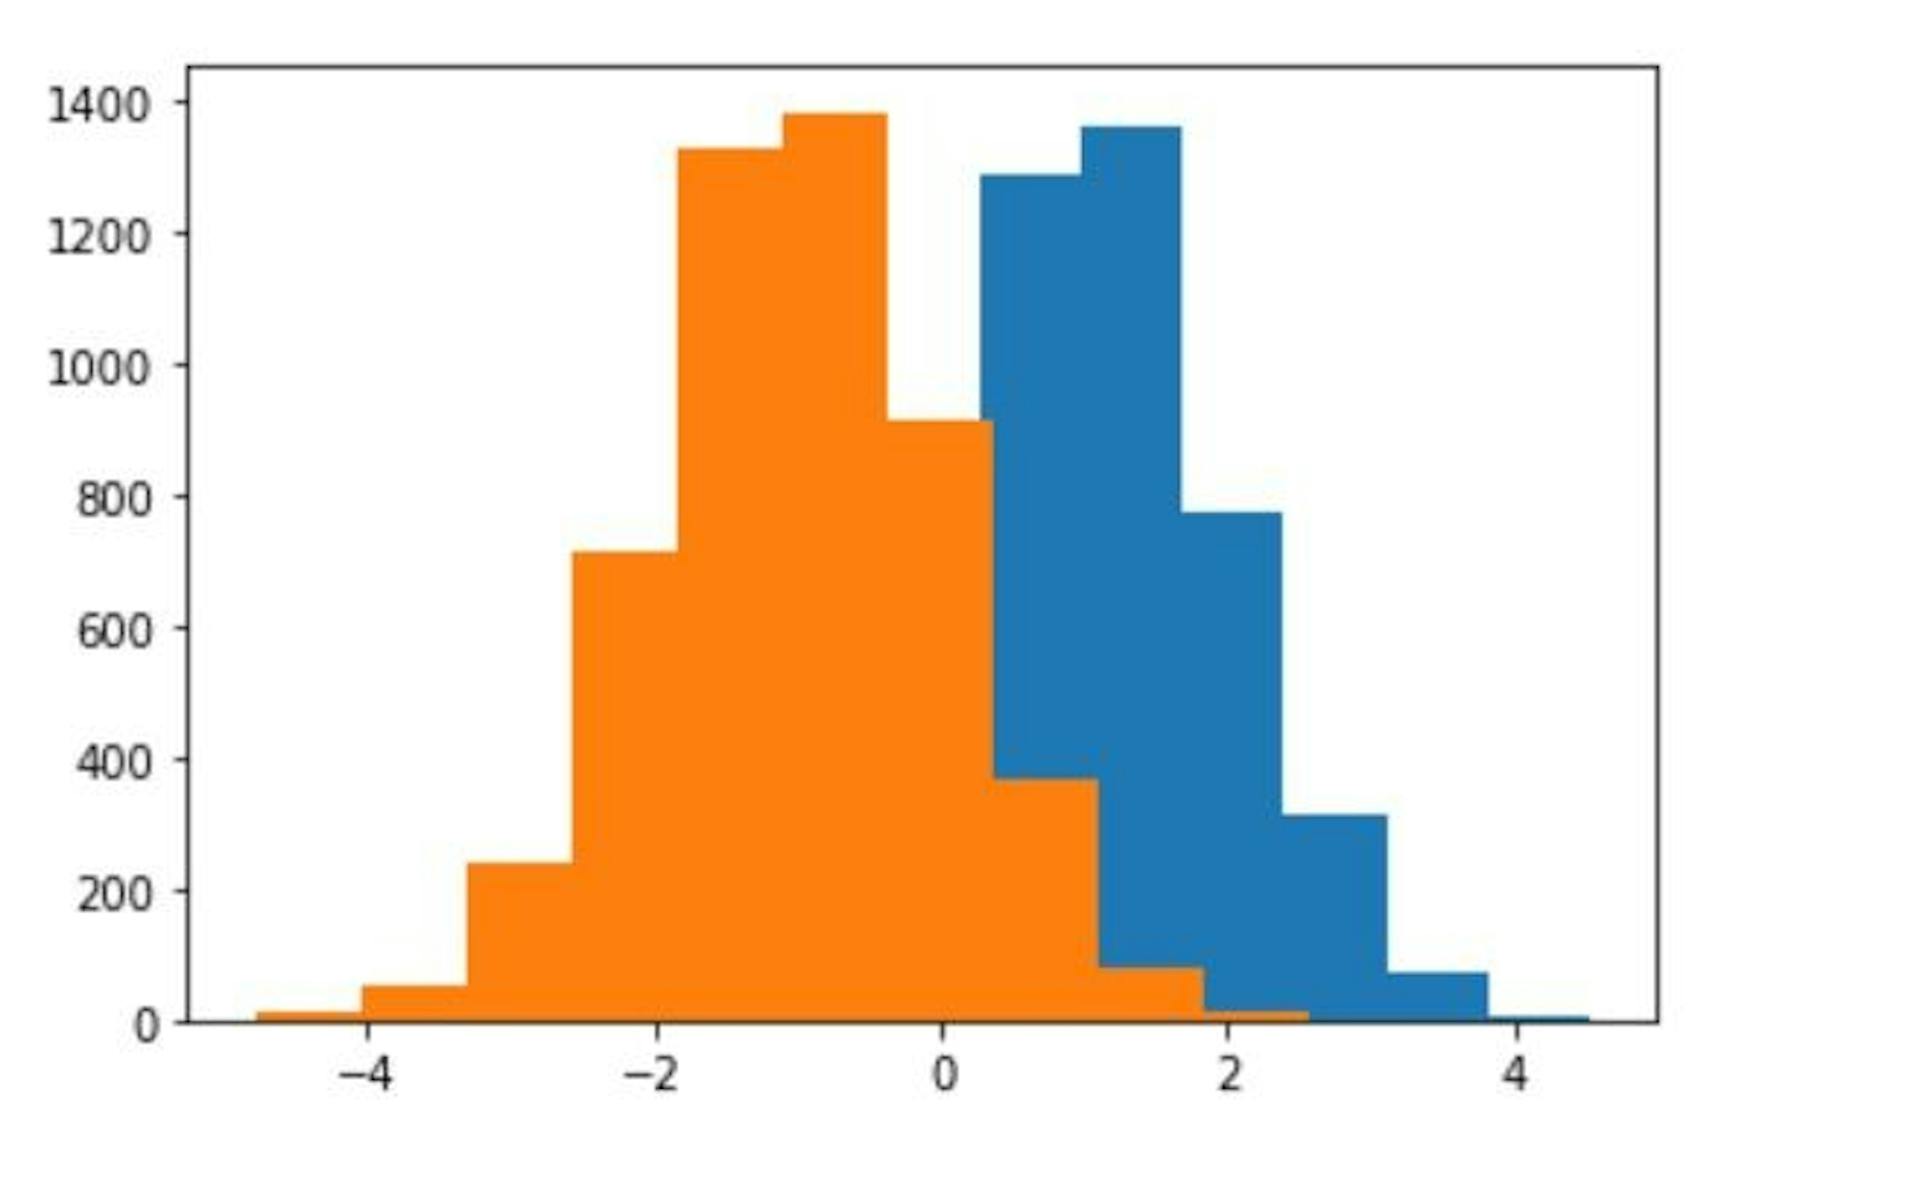 Pontuações boas (laranja) vs ruins (azul)